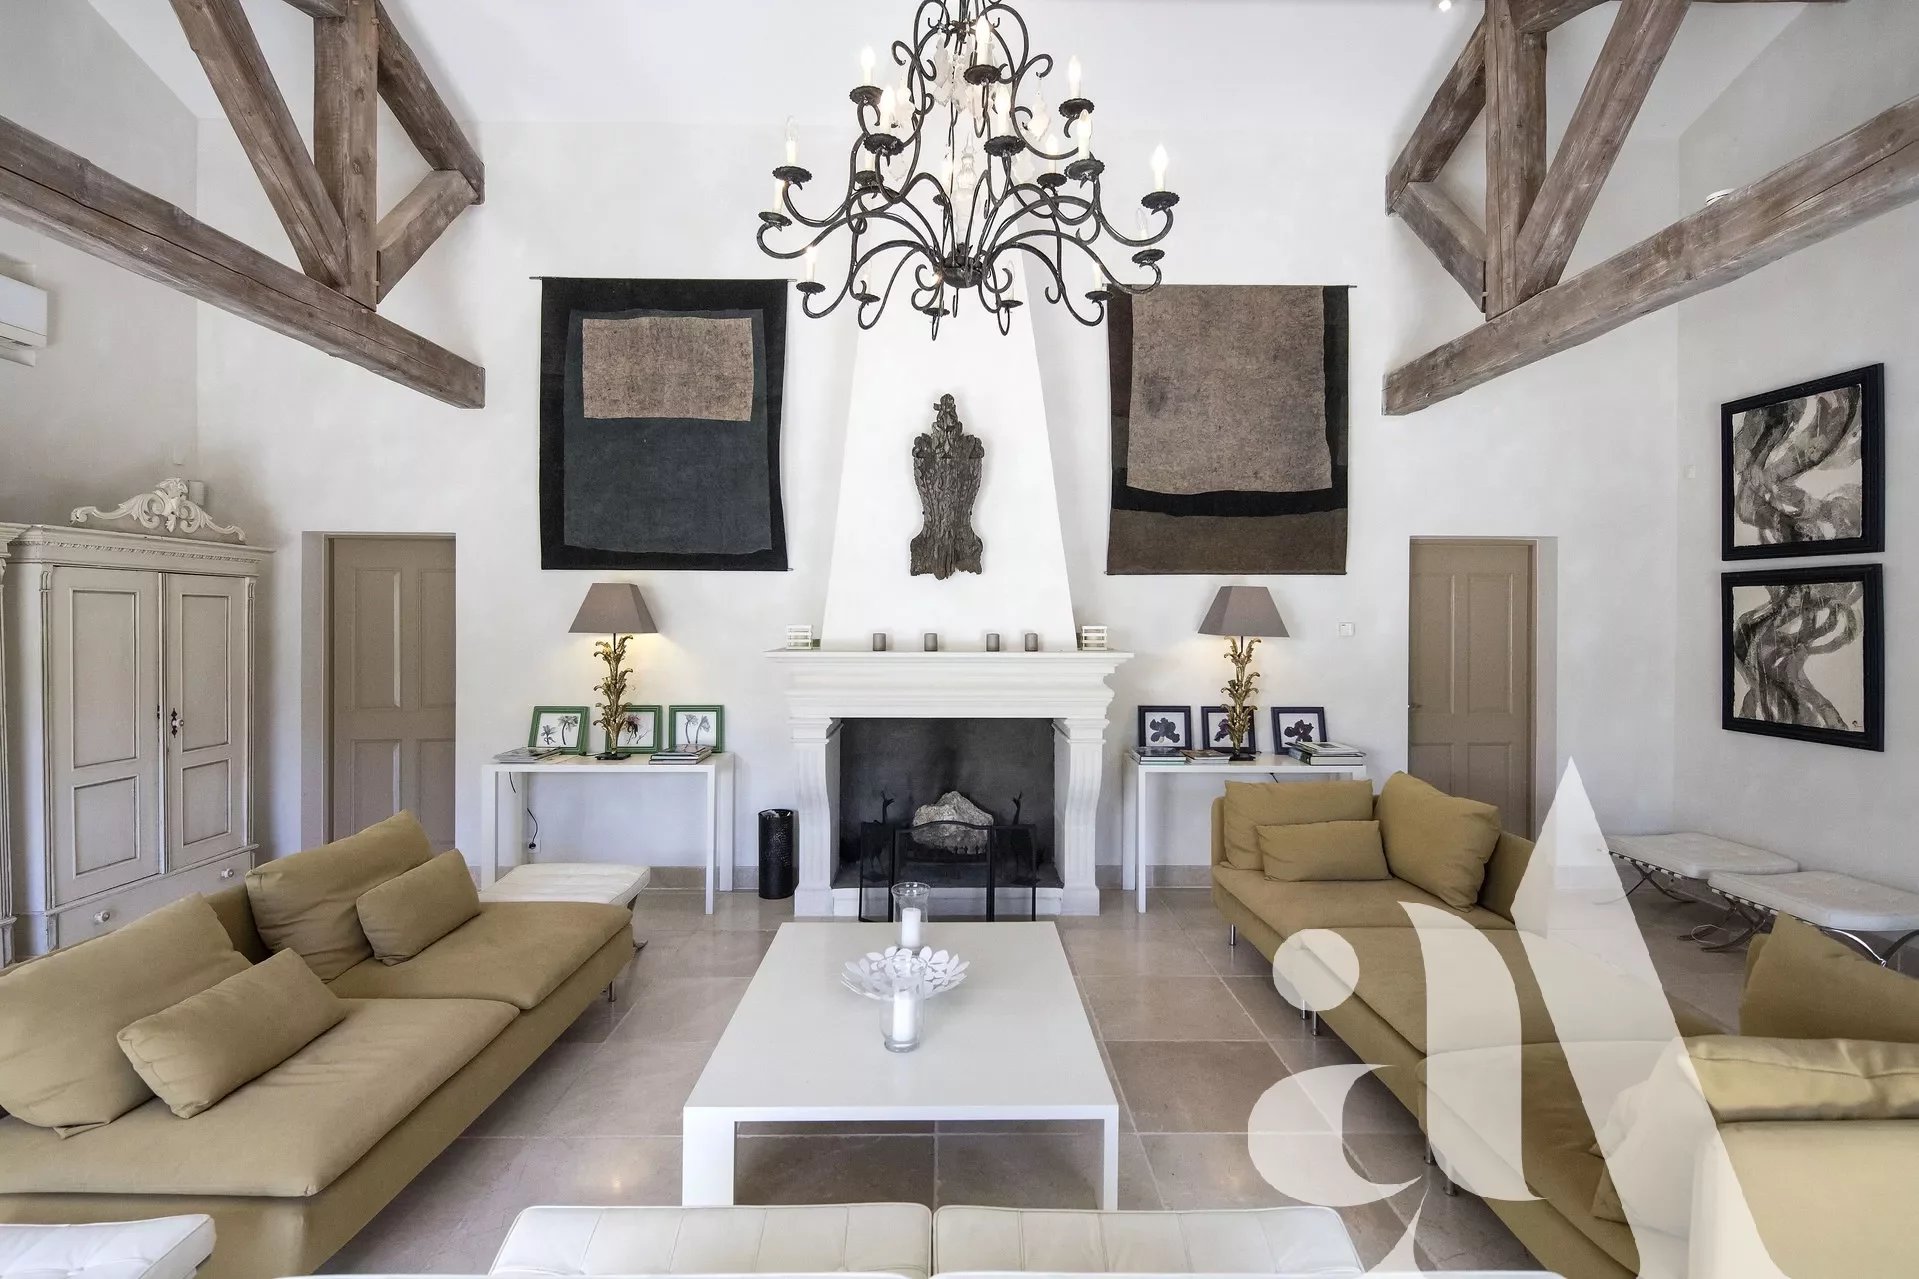 Living-room High ceiling Fireplace Chandelier Tile